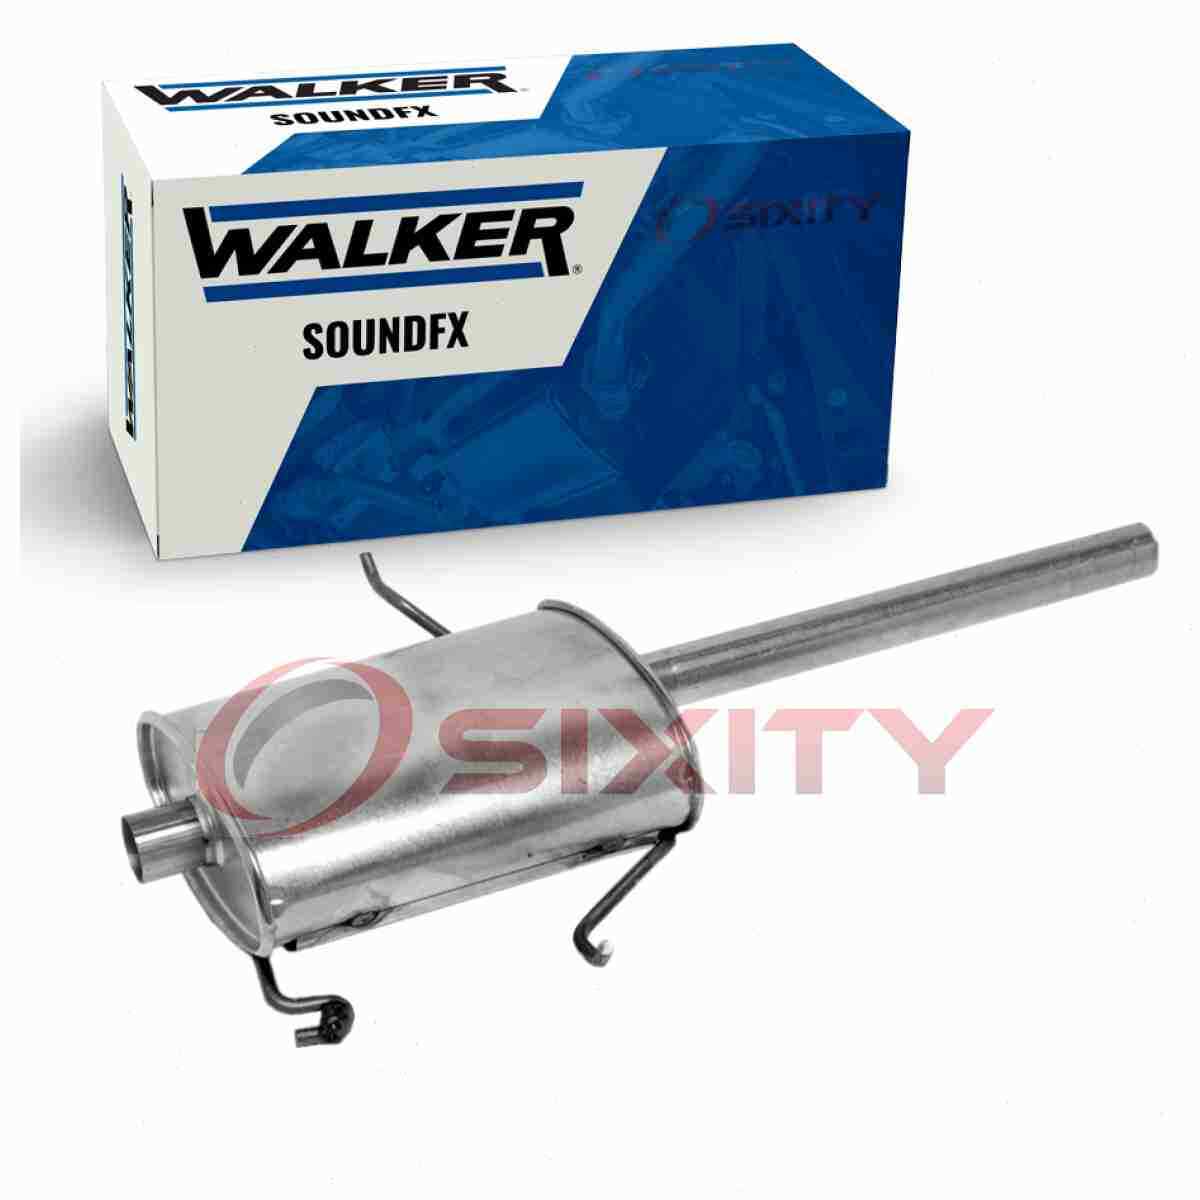 Walker SoundFX Exhaust Muffler for 1995-1997 Geo Metro 1.3L L4 Mufflers  xz